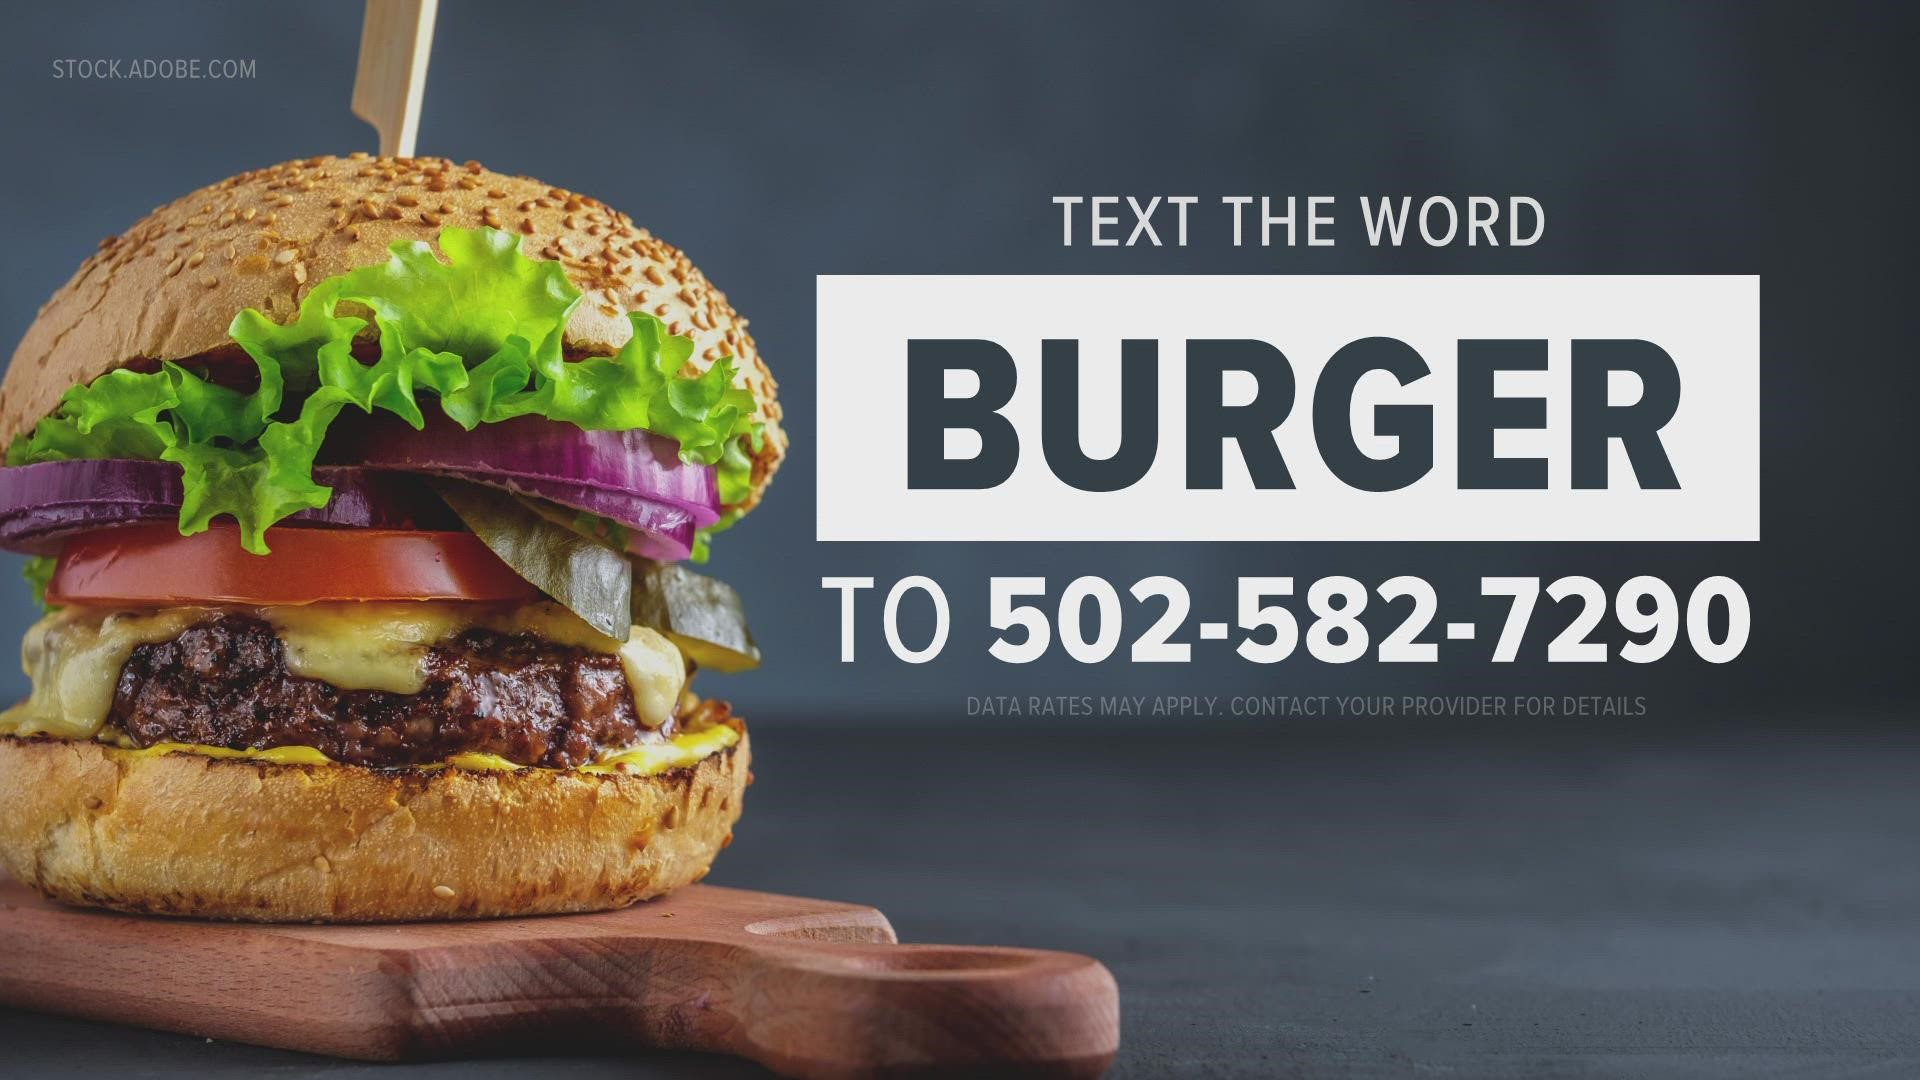 Enjoy $7 gourmet burgers through July 24 at over 25 Louisville restaurants.